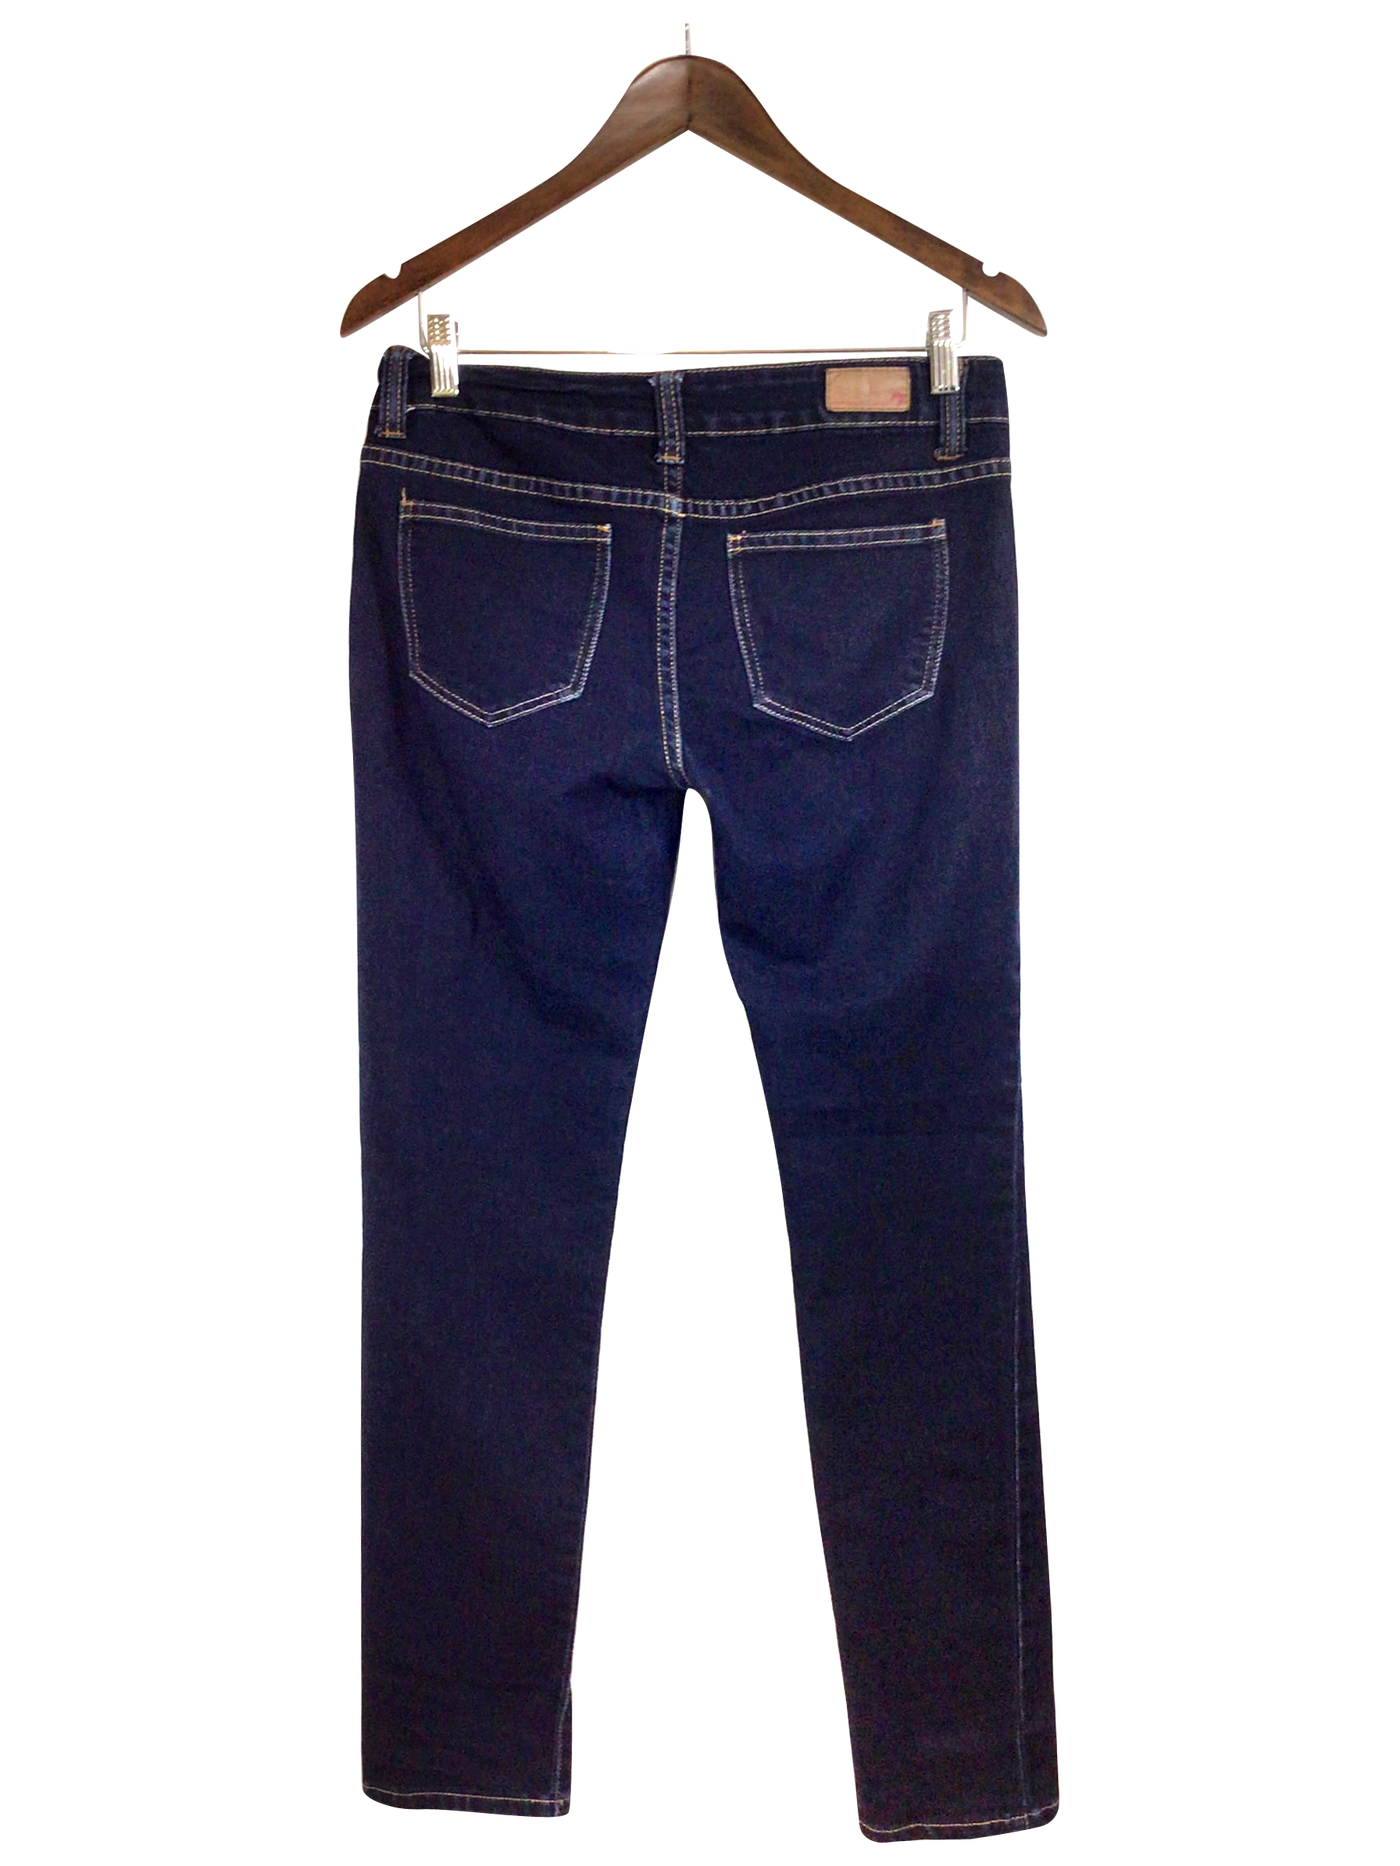 BLUENOTES Straight-legged Jeans Regular fit in Blue - Size 28x32 | 15.5 $ KOOP